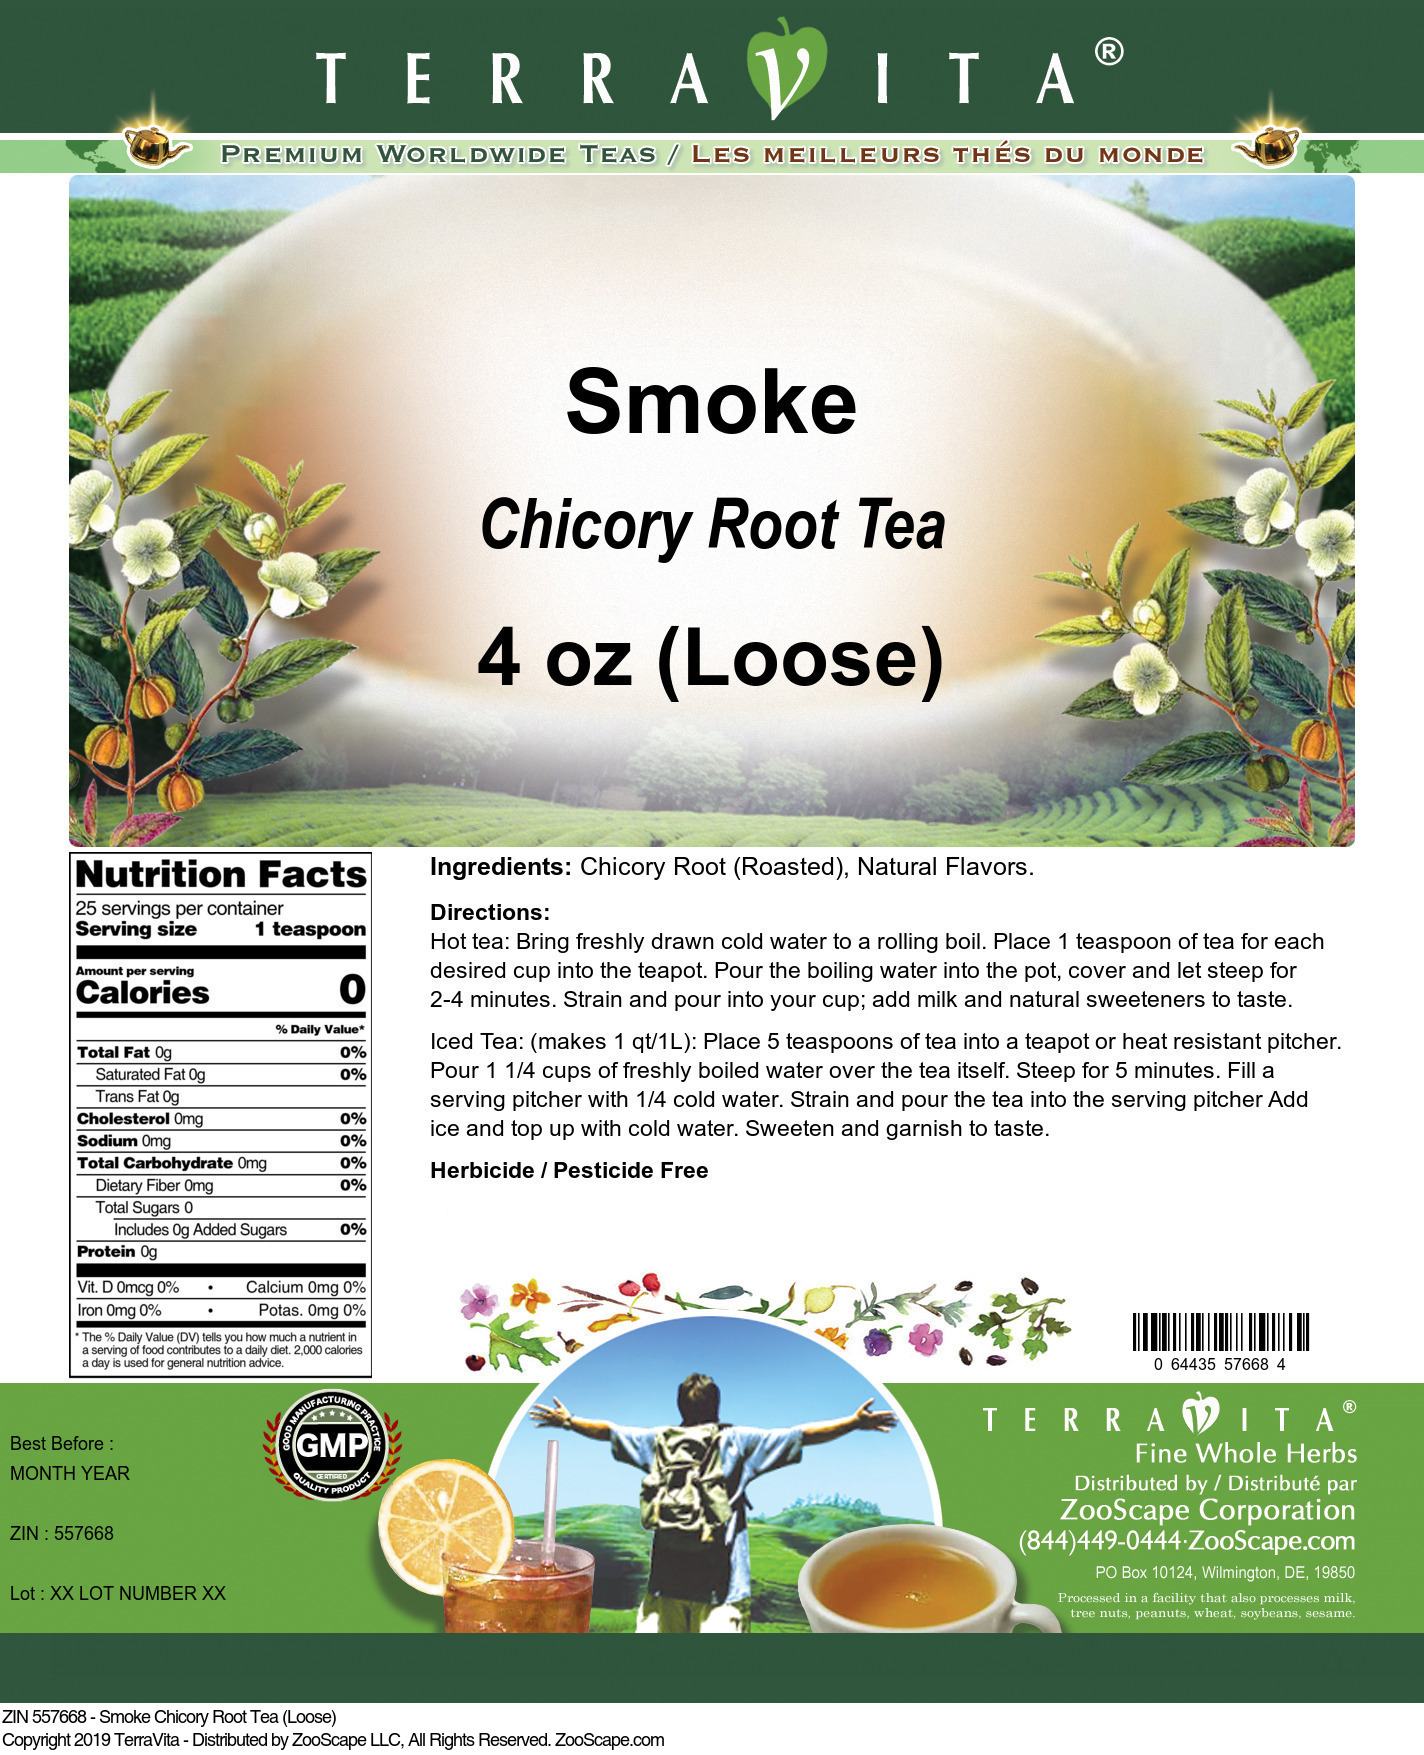 Smoke Chicory Root Tea (Loose) - Label